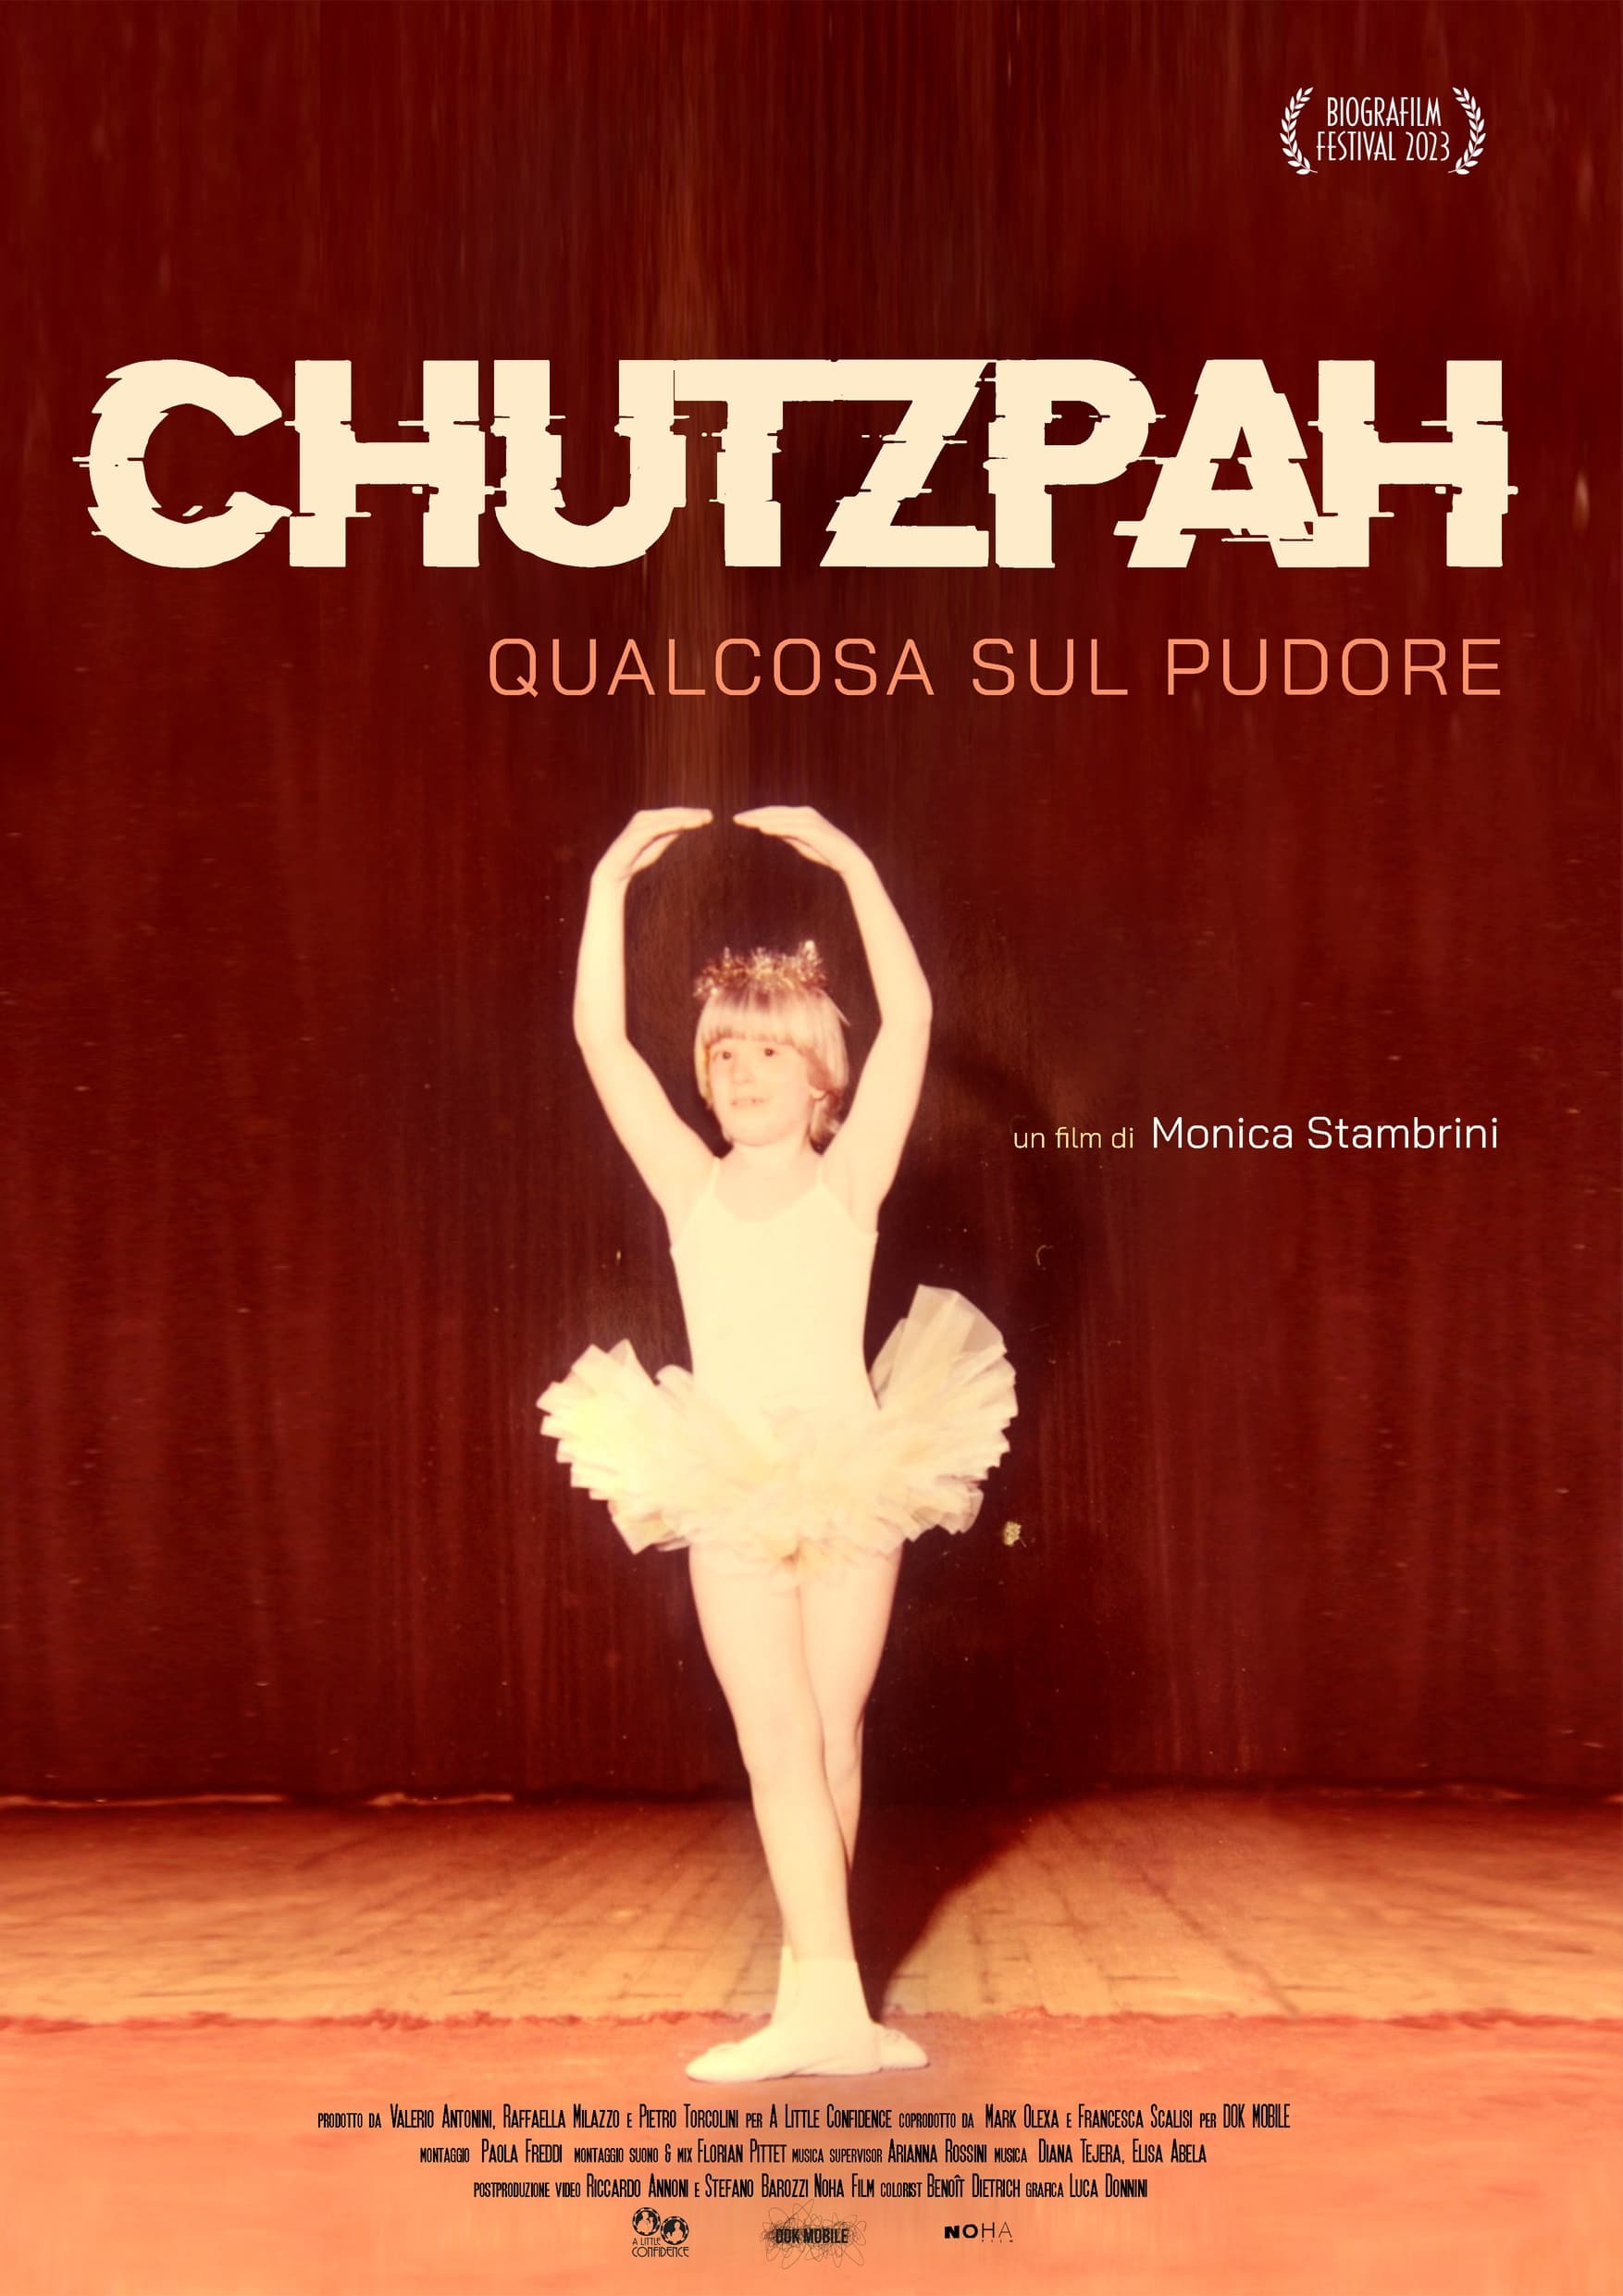 Chutzpah - qualcosa sul pudore